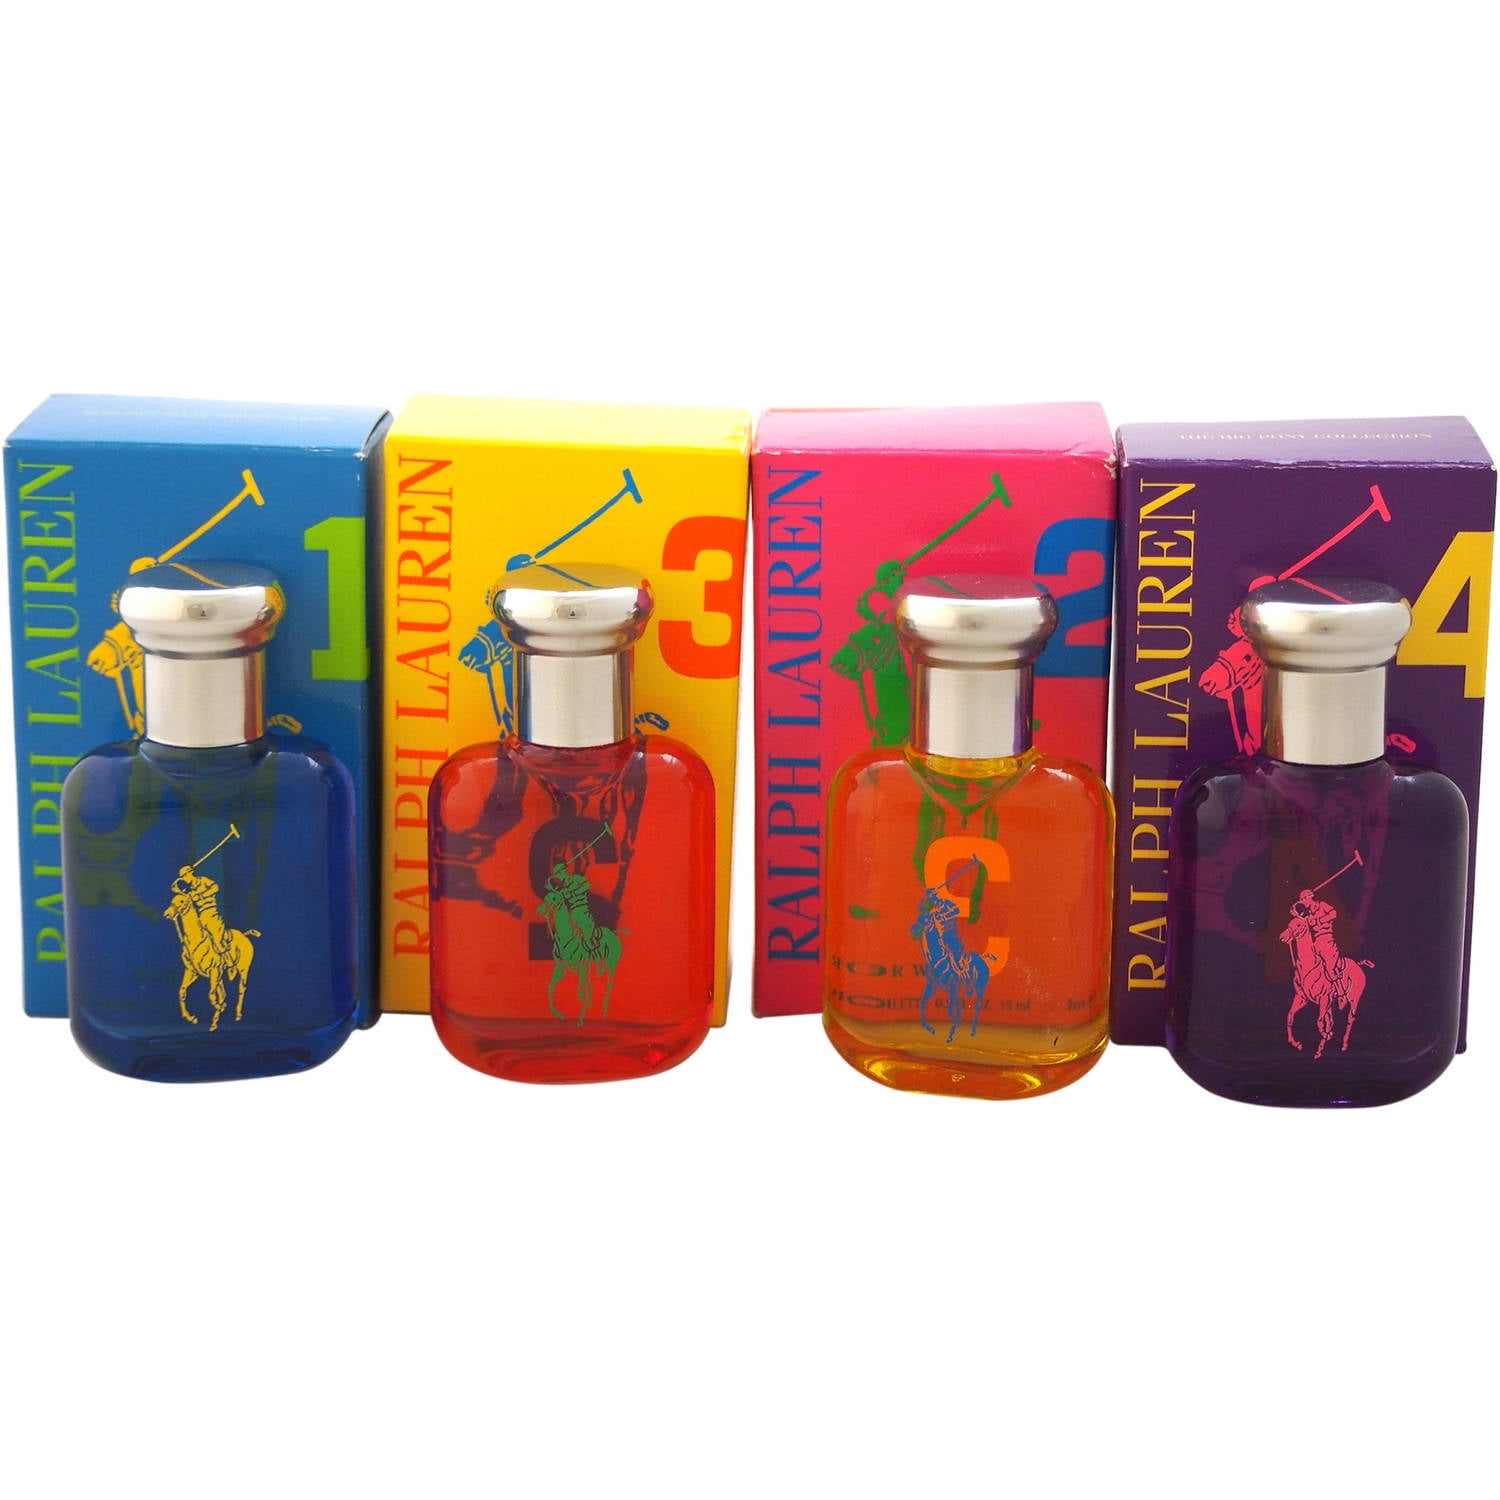 ralph lauren big pony collection miniature fragrance gift set